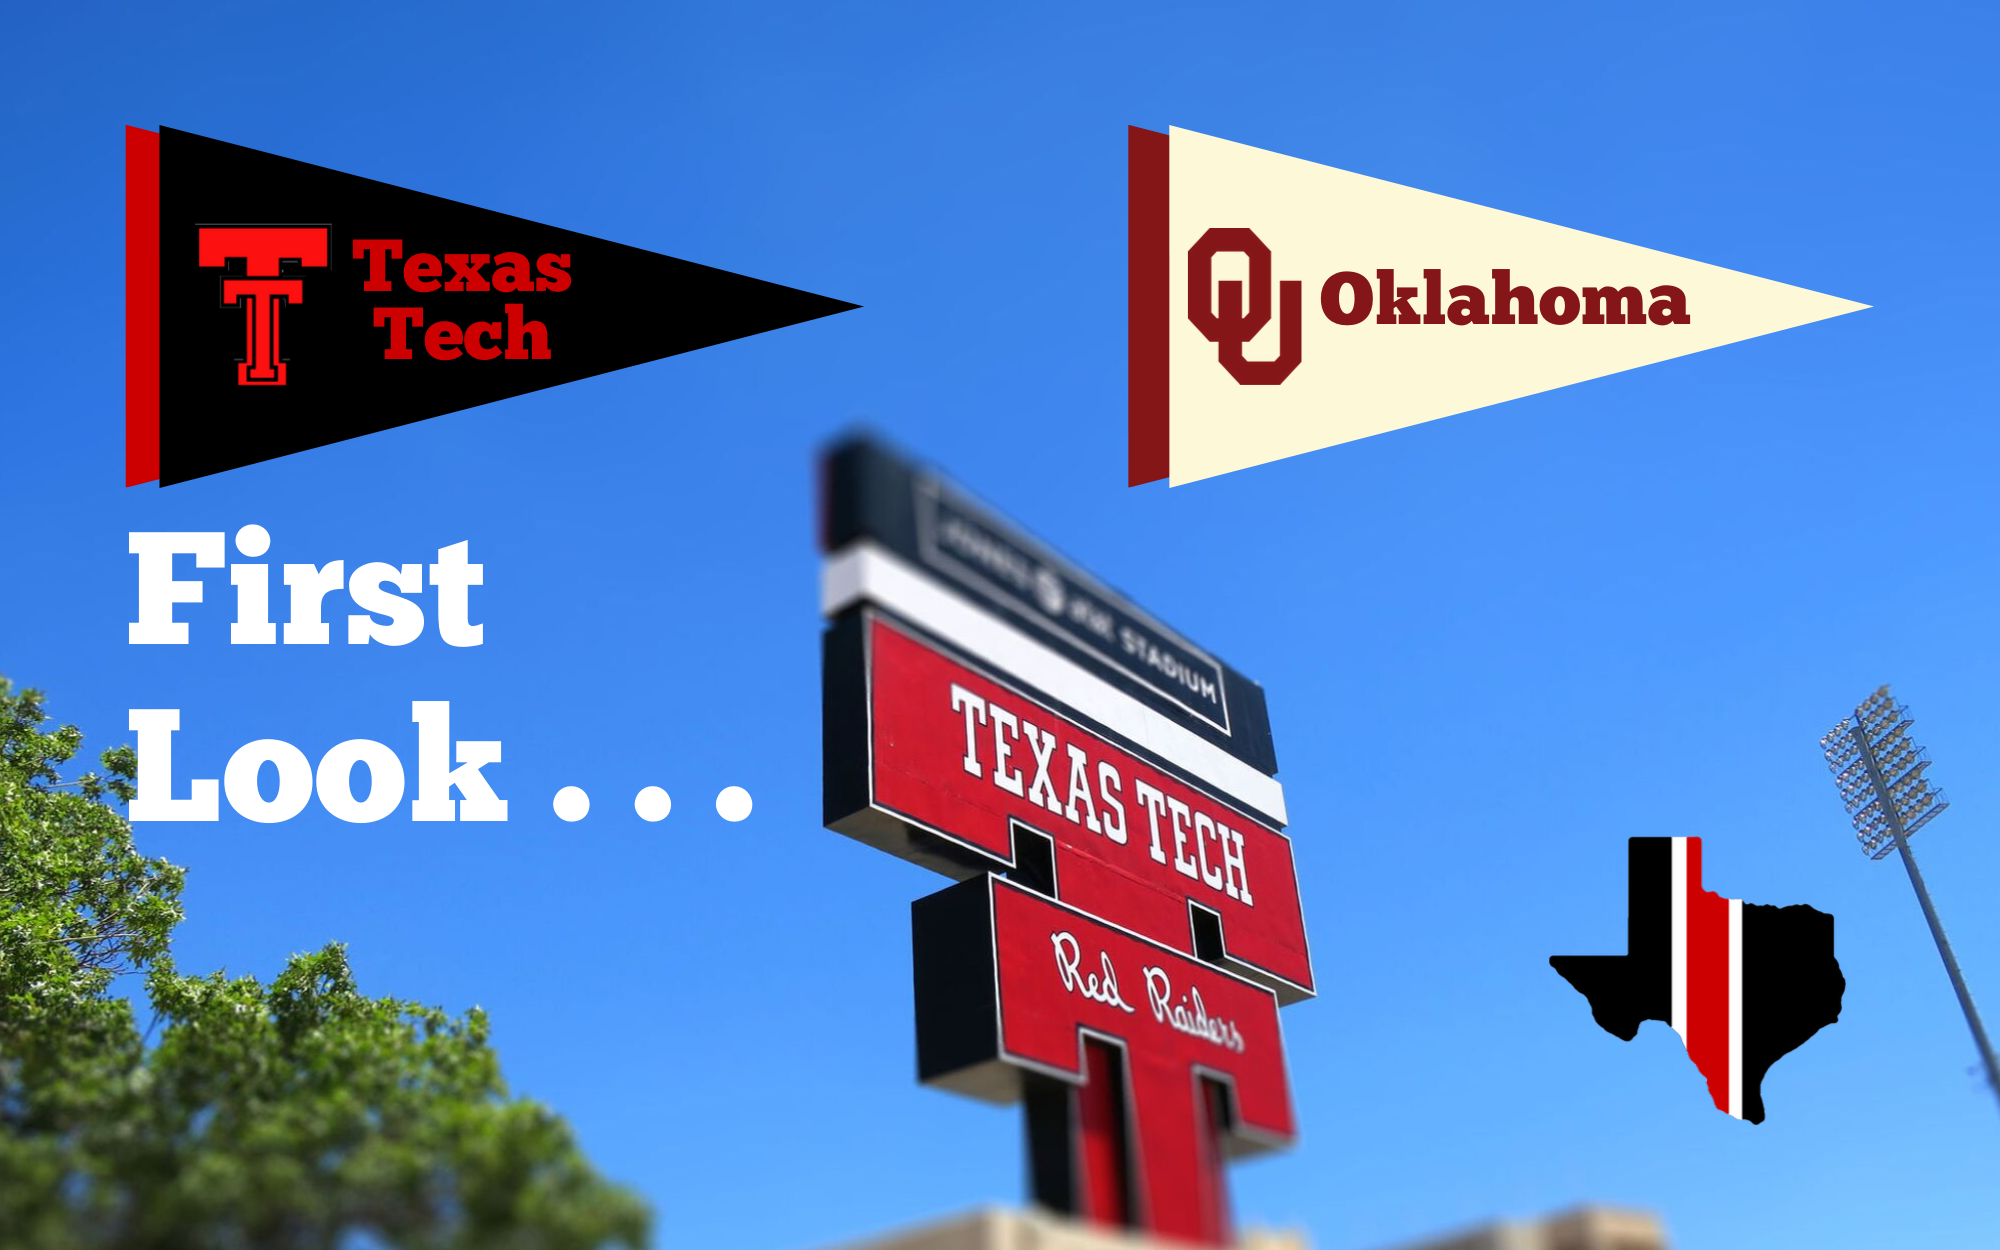 First Look . . . Texas Tech Red Raiders vs. Oklahoma Sooners